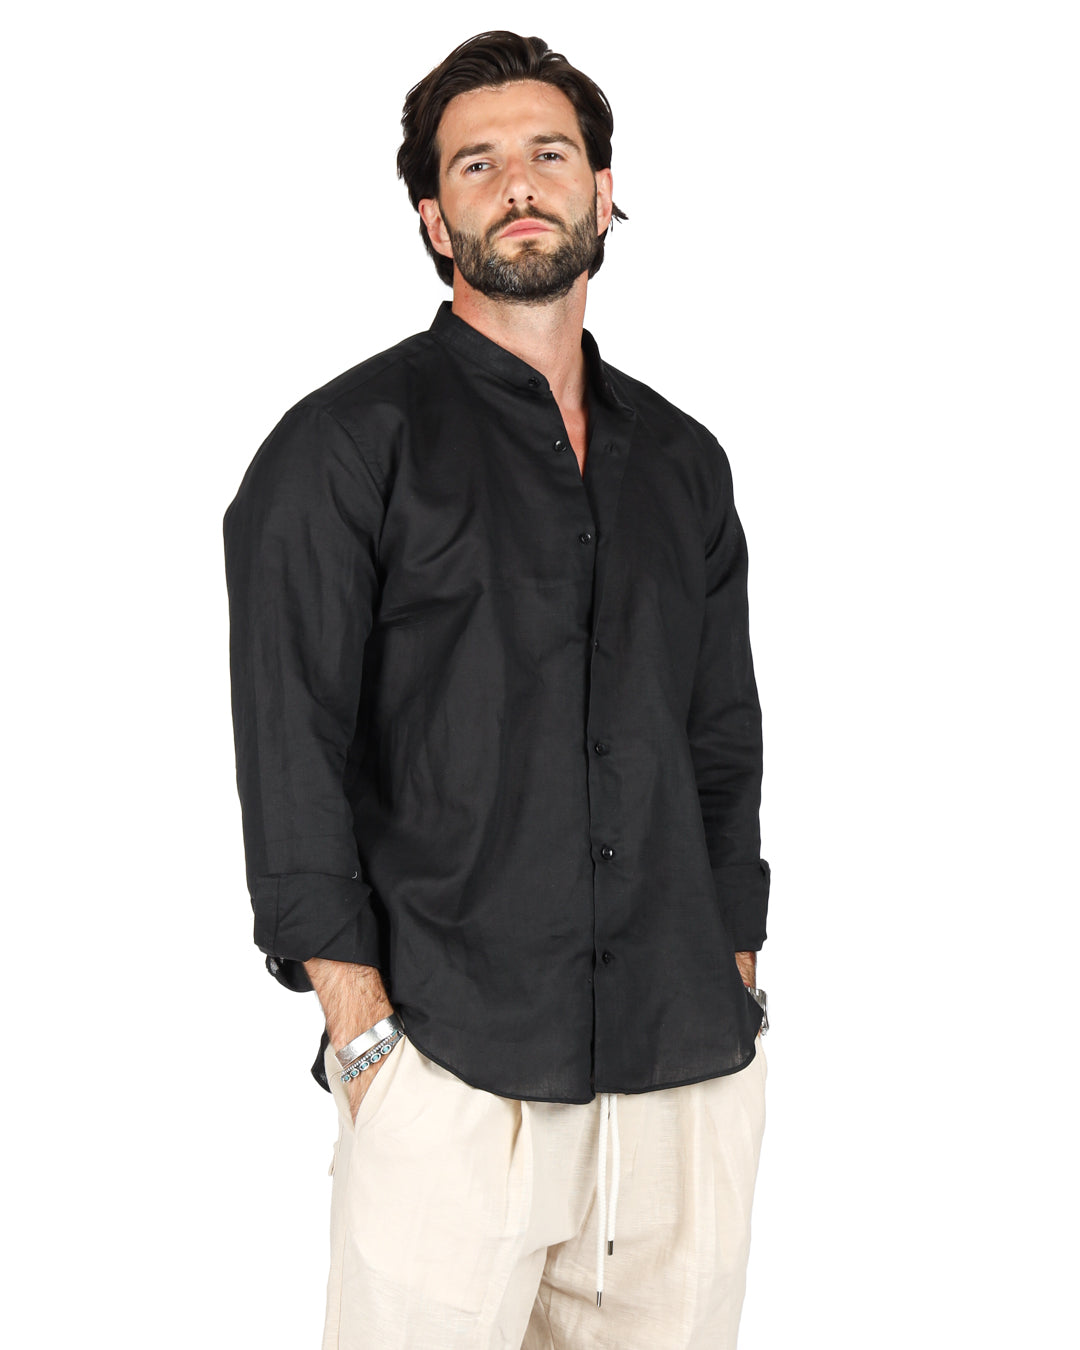 Positano - Black Korean linen shirt